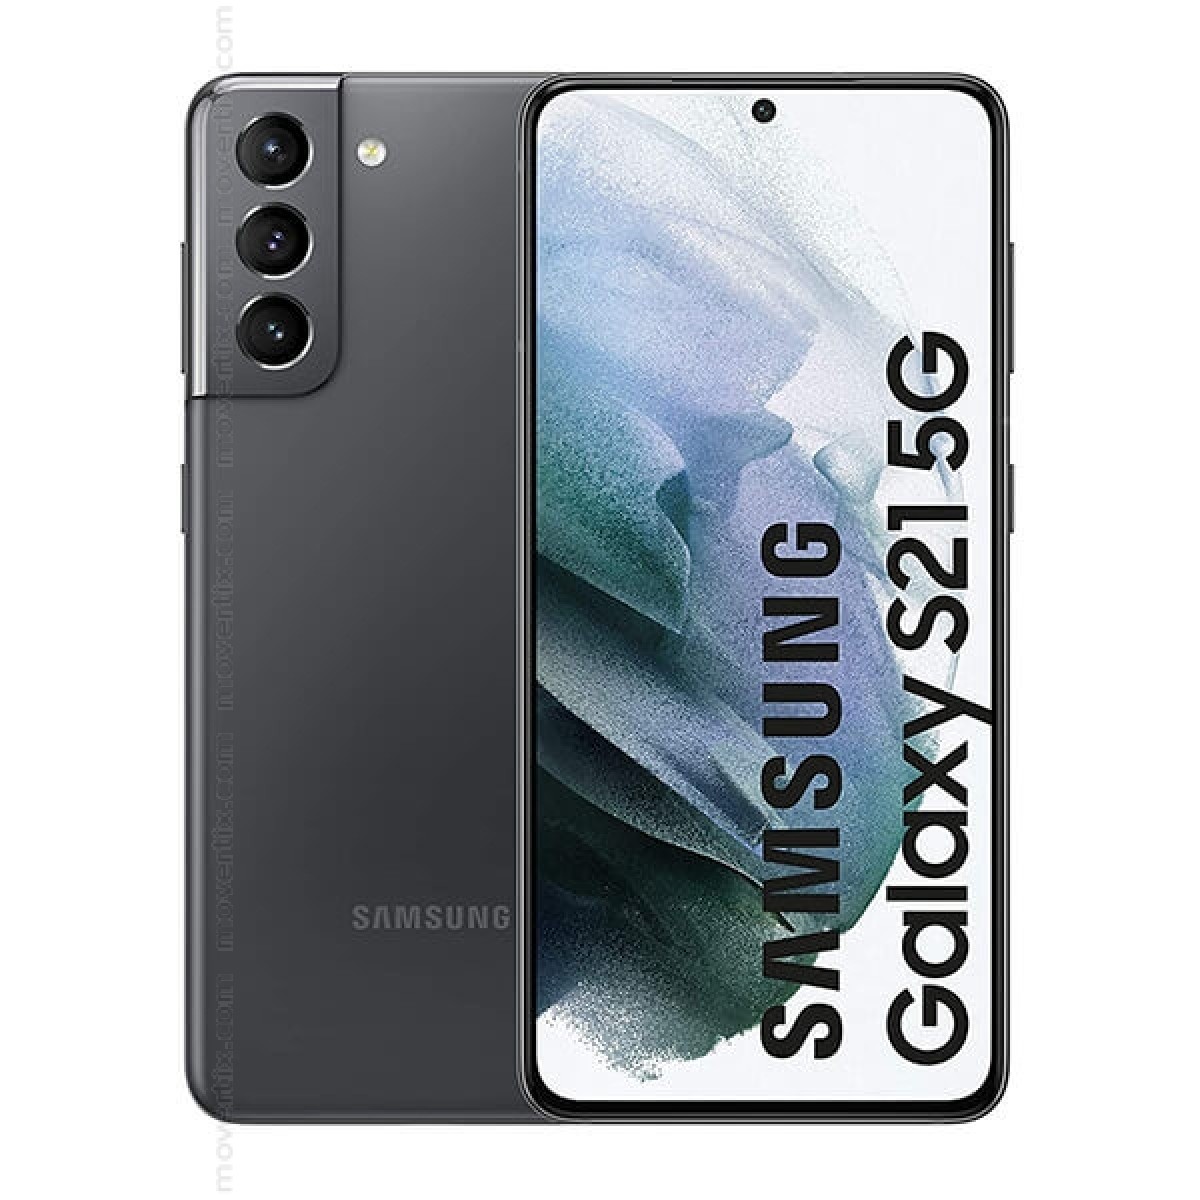 Samsung Galaxy S21 5G Phantom Black 256GB and 8GB RAM - SM-G991B 